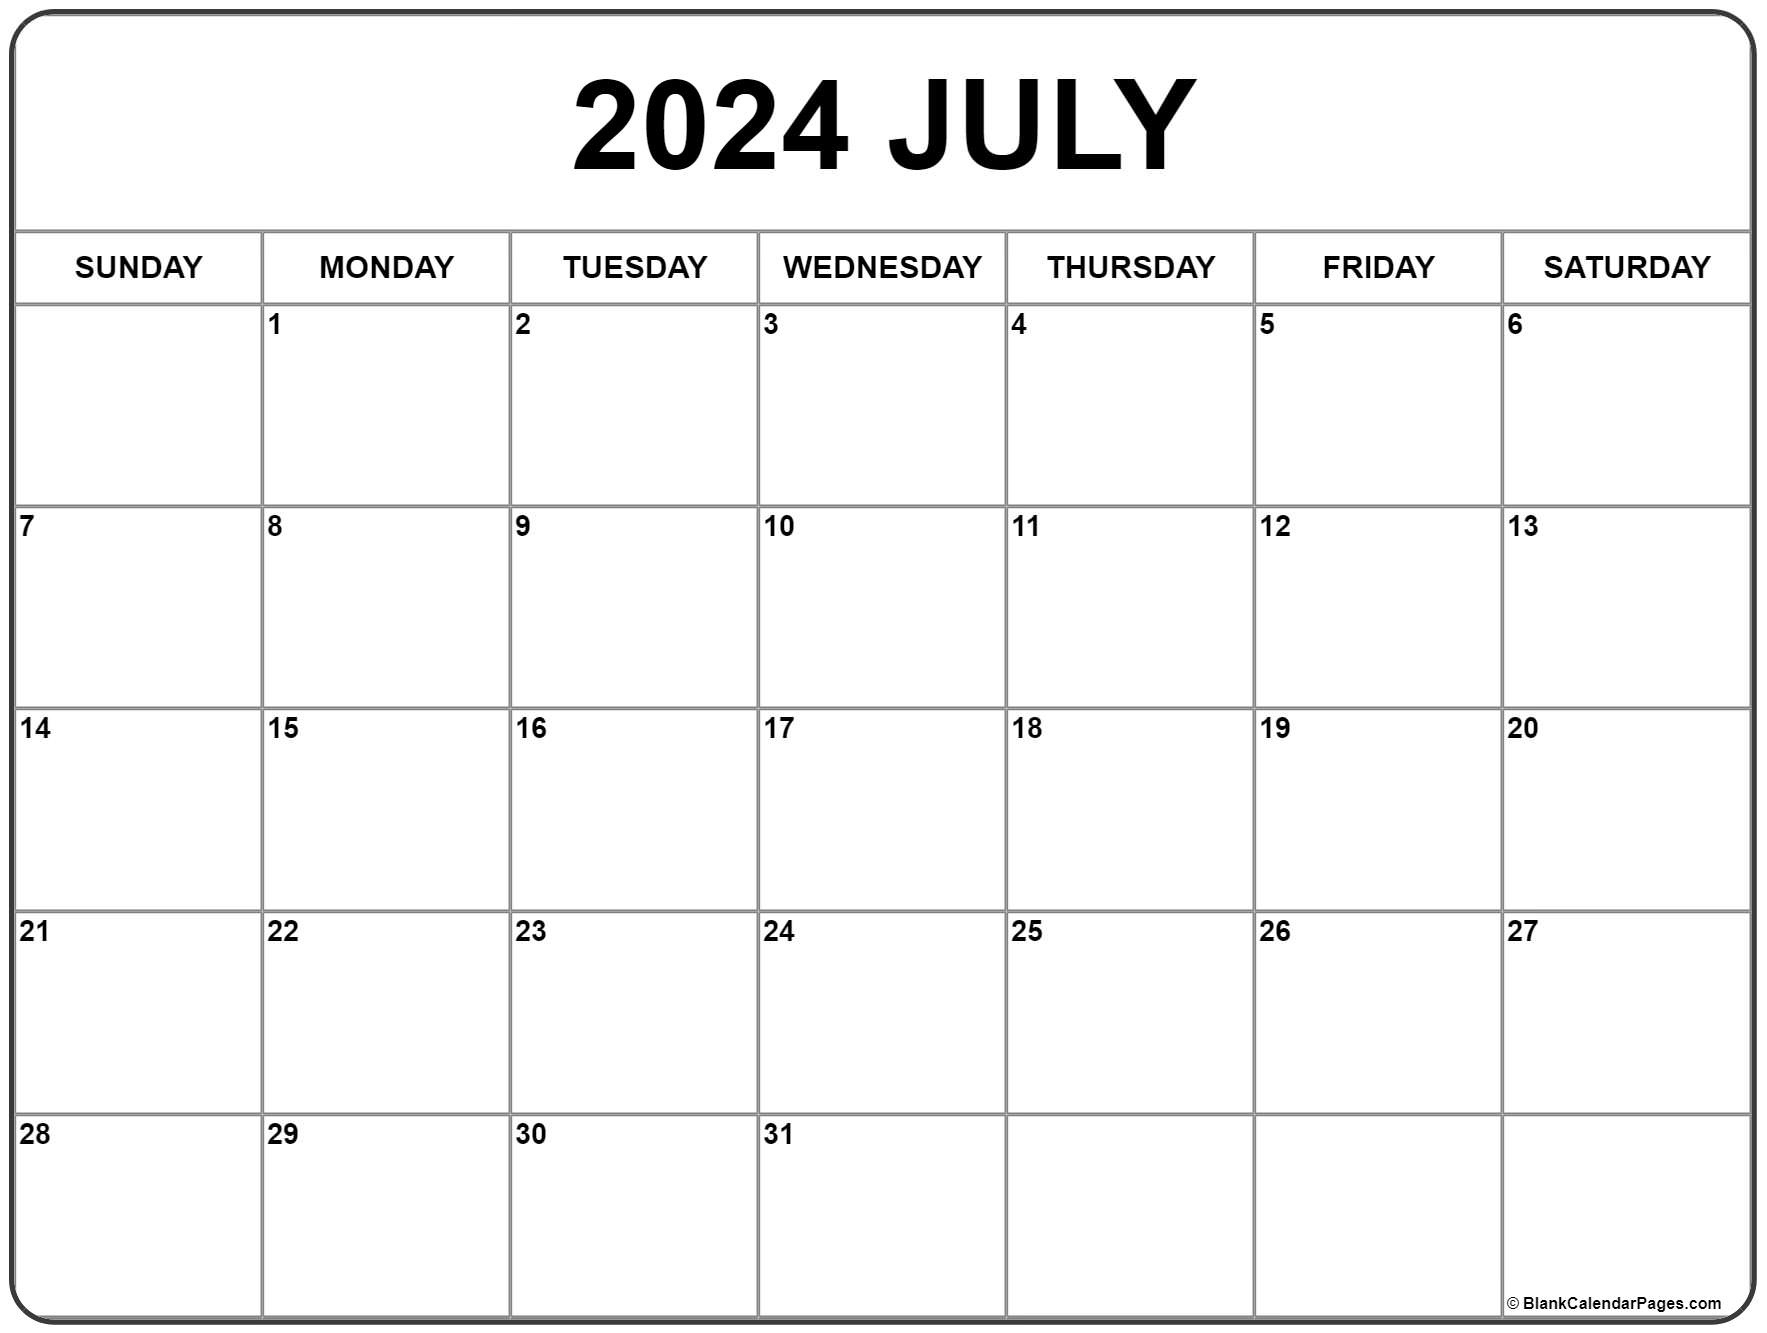 July 2024 Calendar | Free Printable Calendar pertaining to June 2024 July 2024 Calendar